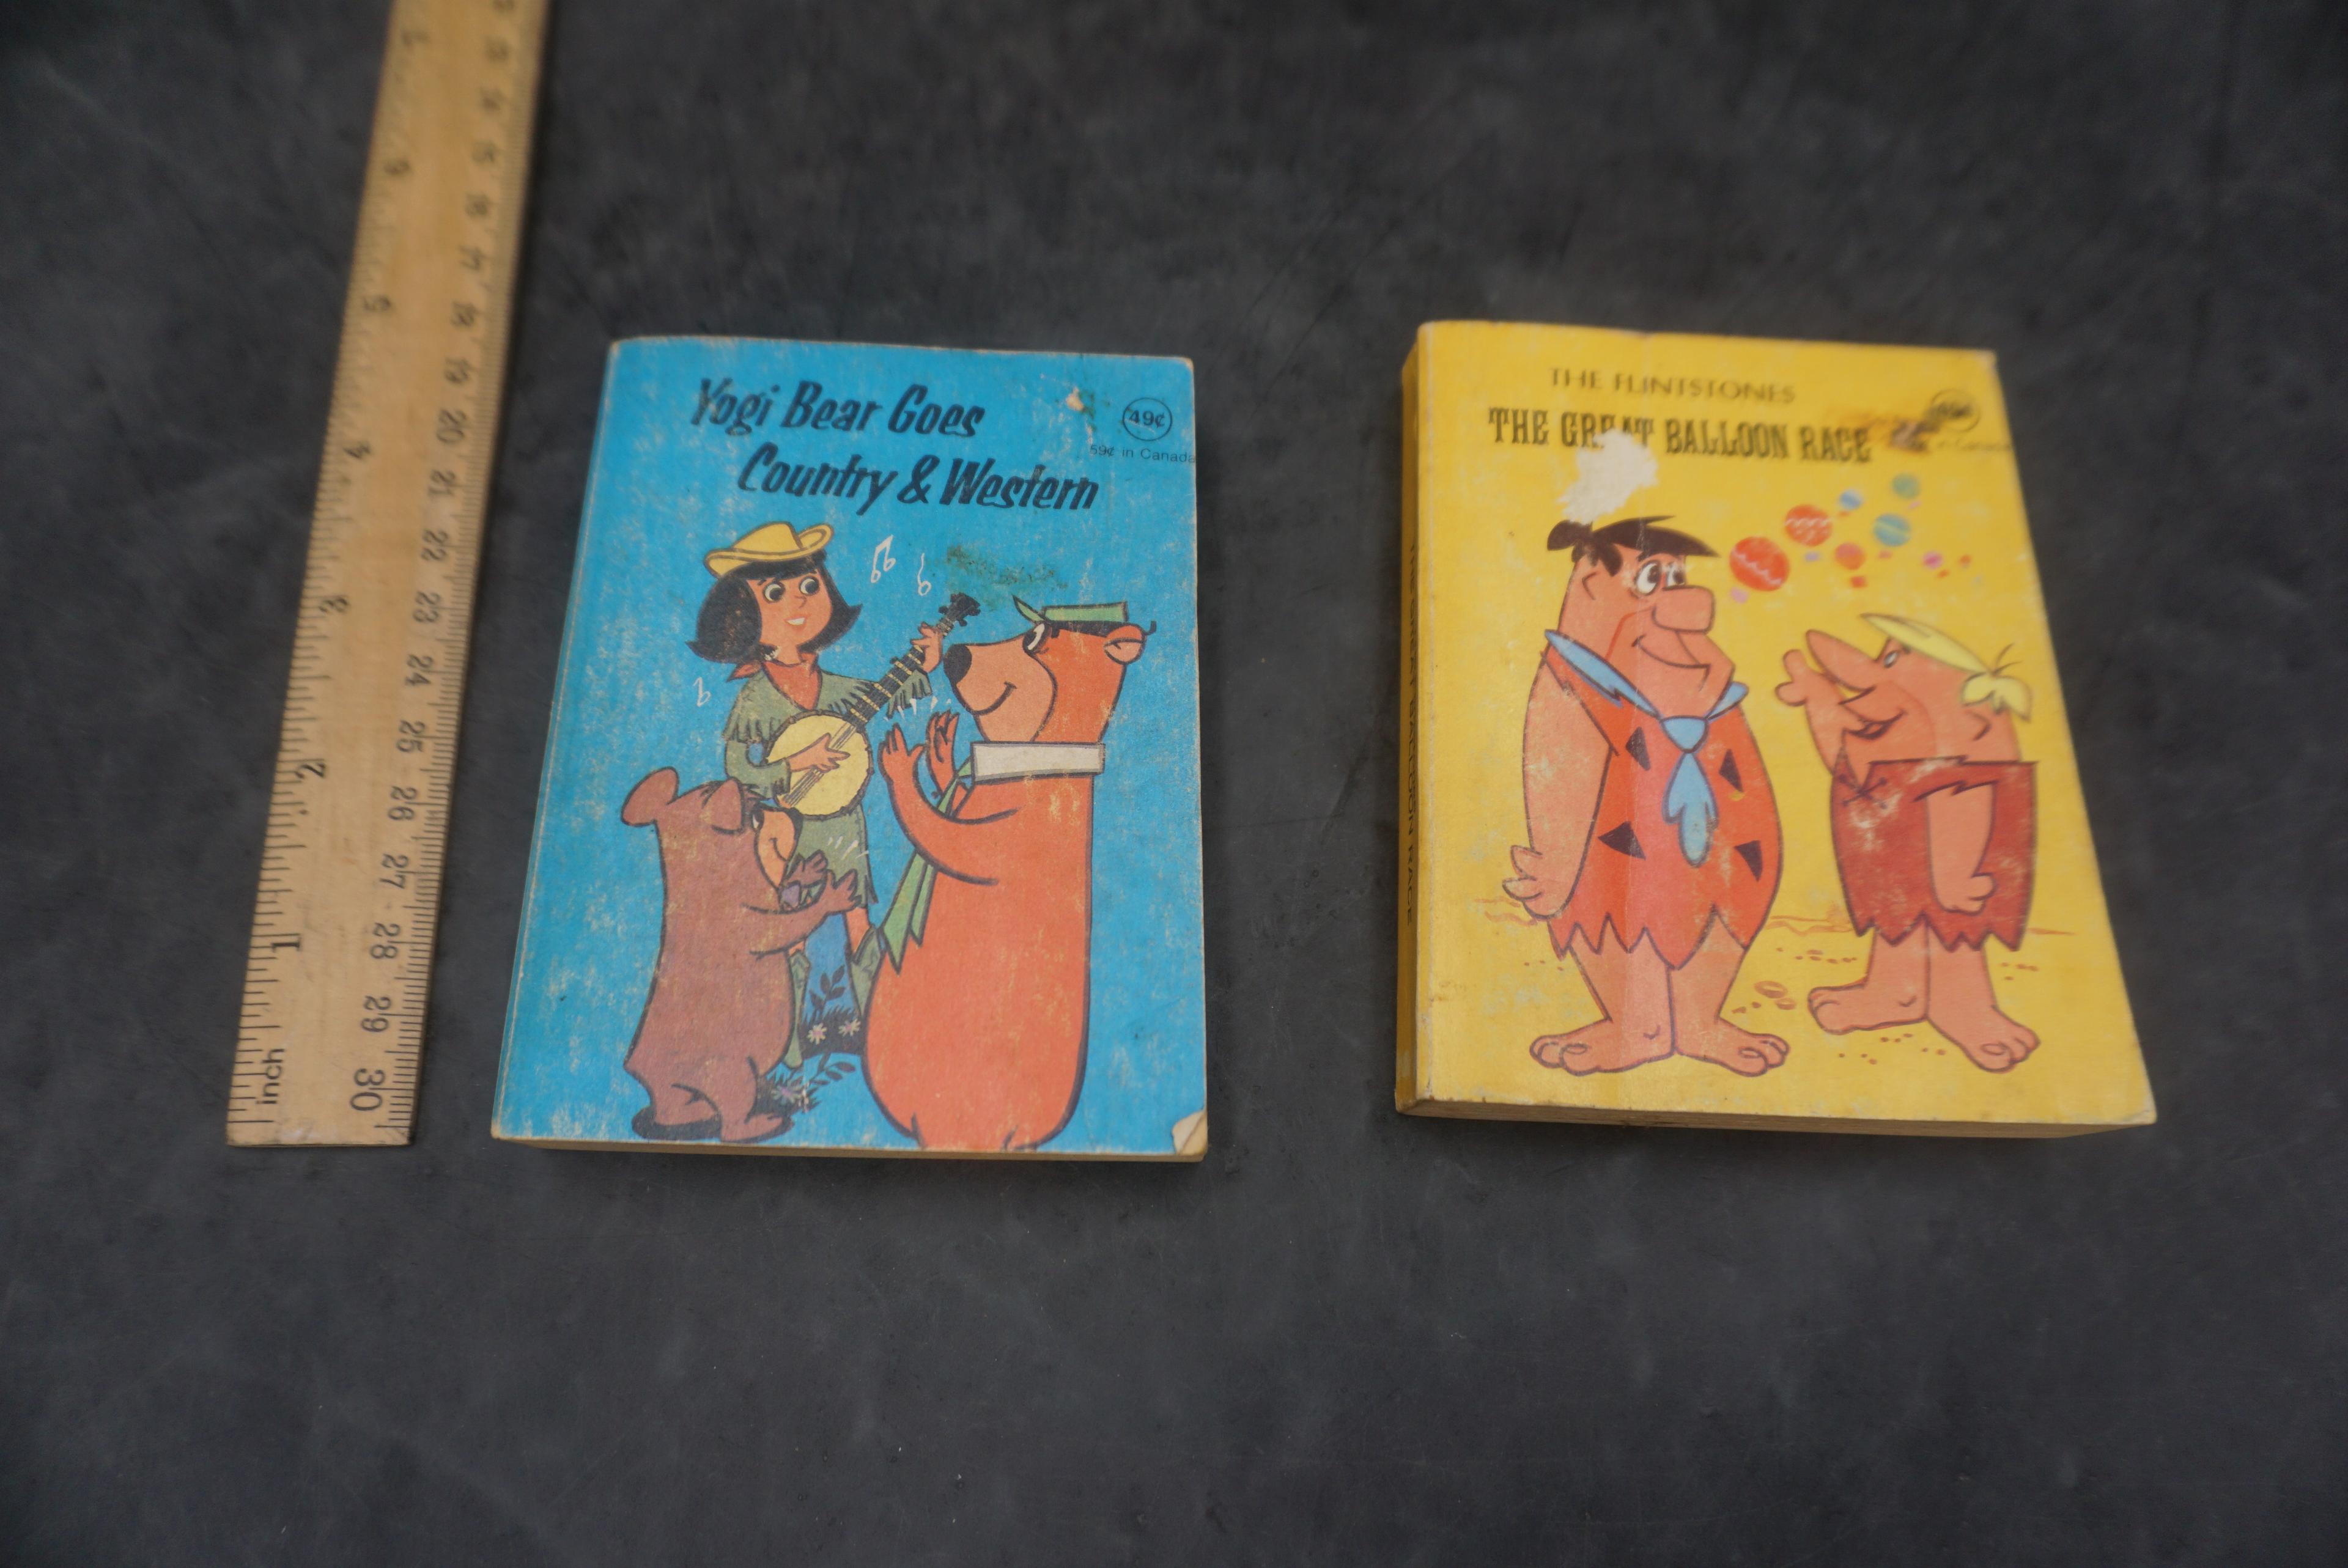 2 Books - Yogi Bear Goes Country & Western, The Flintstones The Great Balloon Race